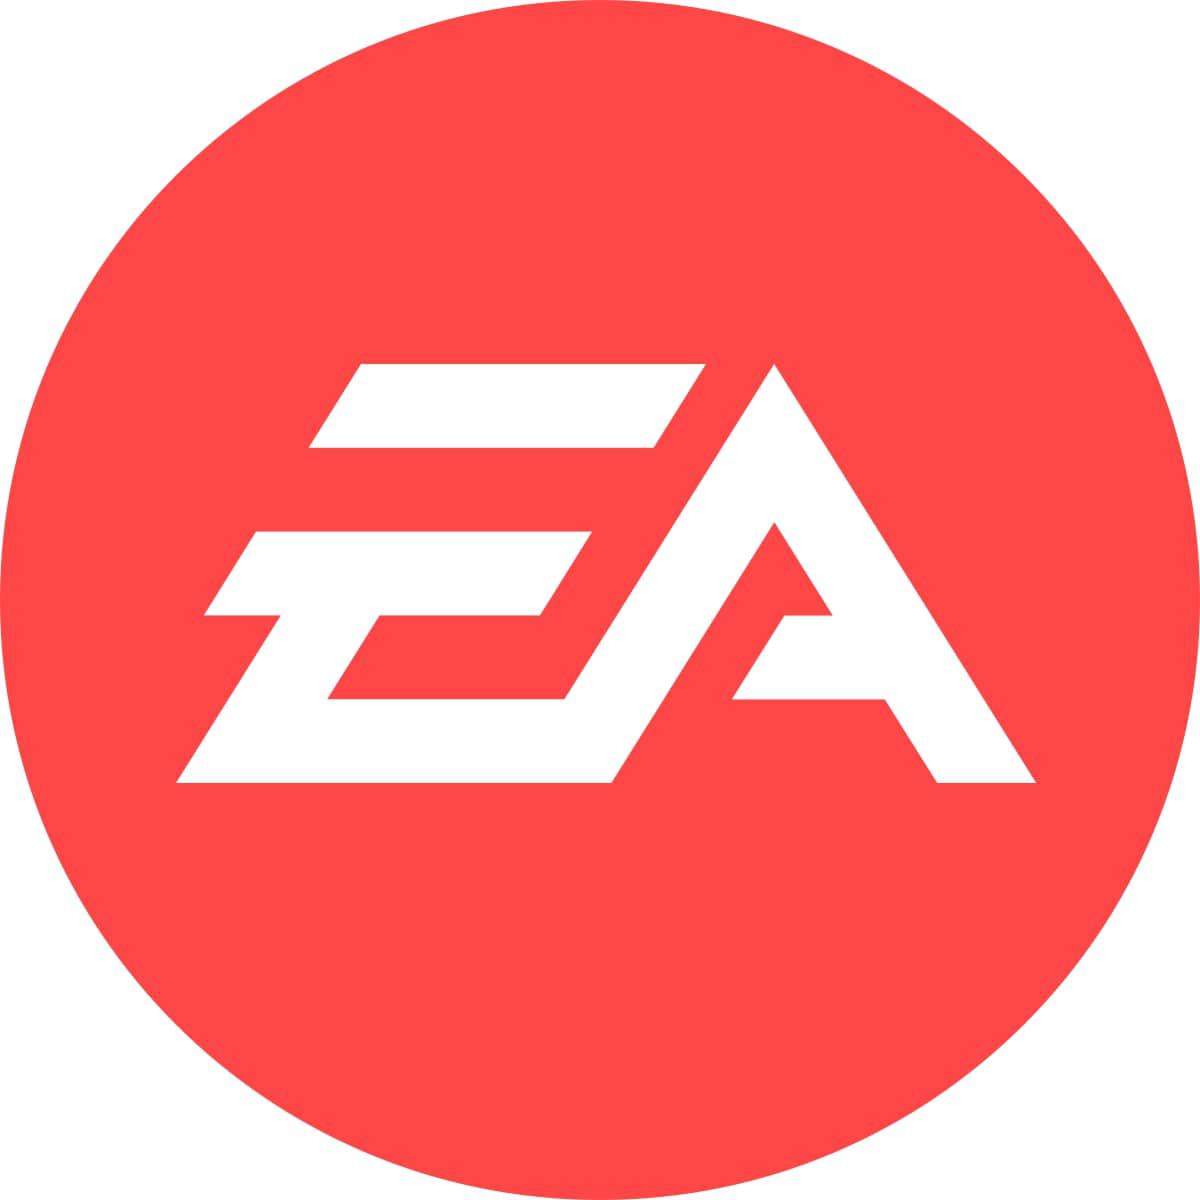 Electronic Arts/Respawn